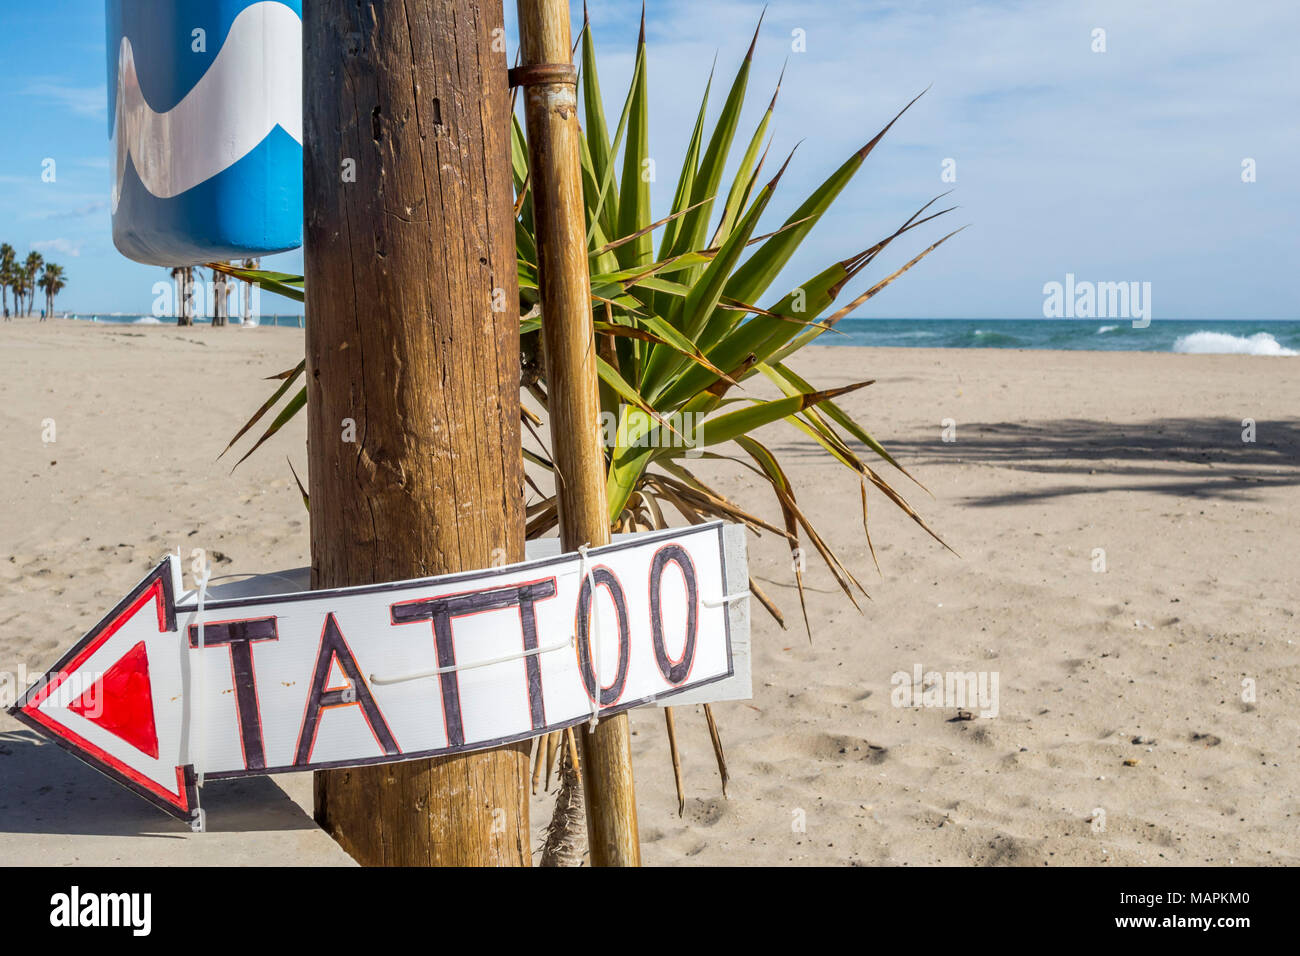 Mediterranean beach and tatoo sign. Stock Photo